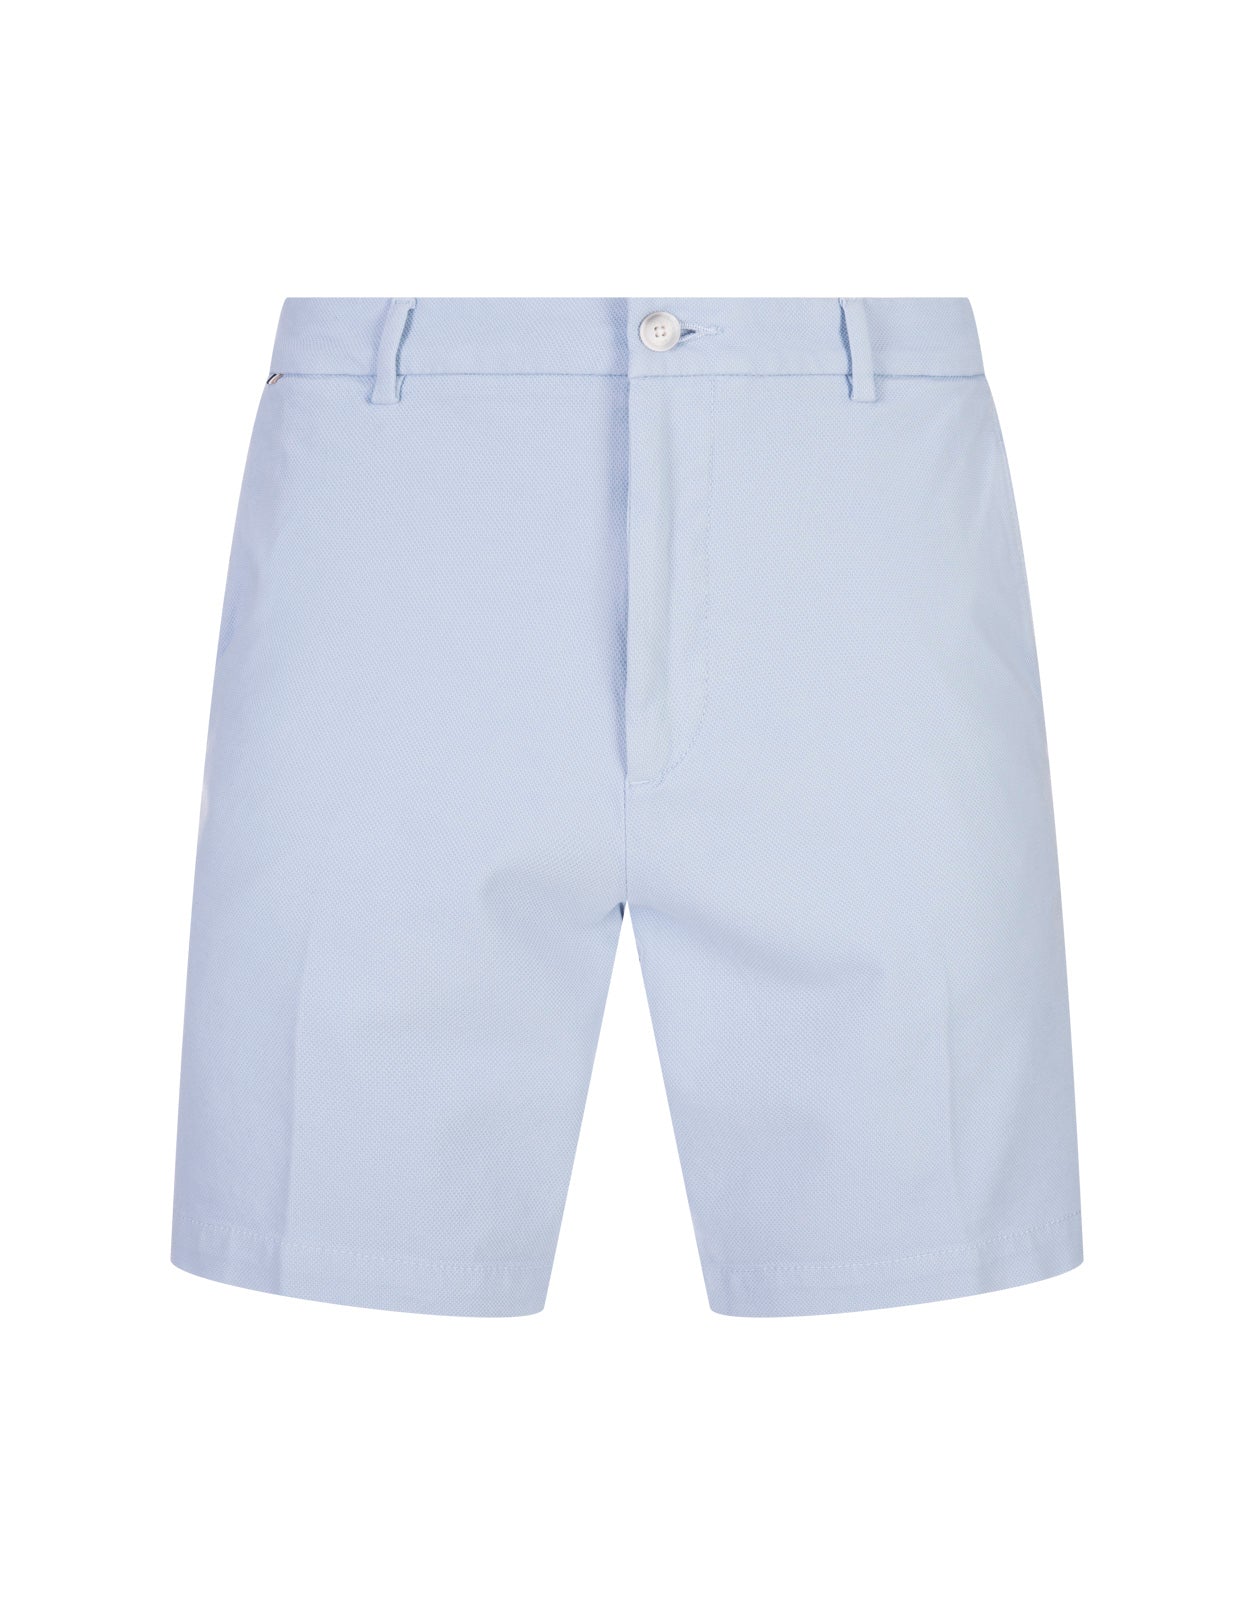 BOSS - KANE-SHORTS - Light Pastel Blue Stretch Cotton Regular Fit Shorts 50512527 450